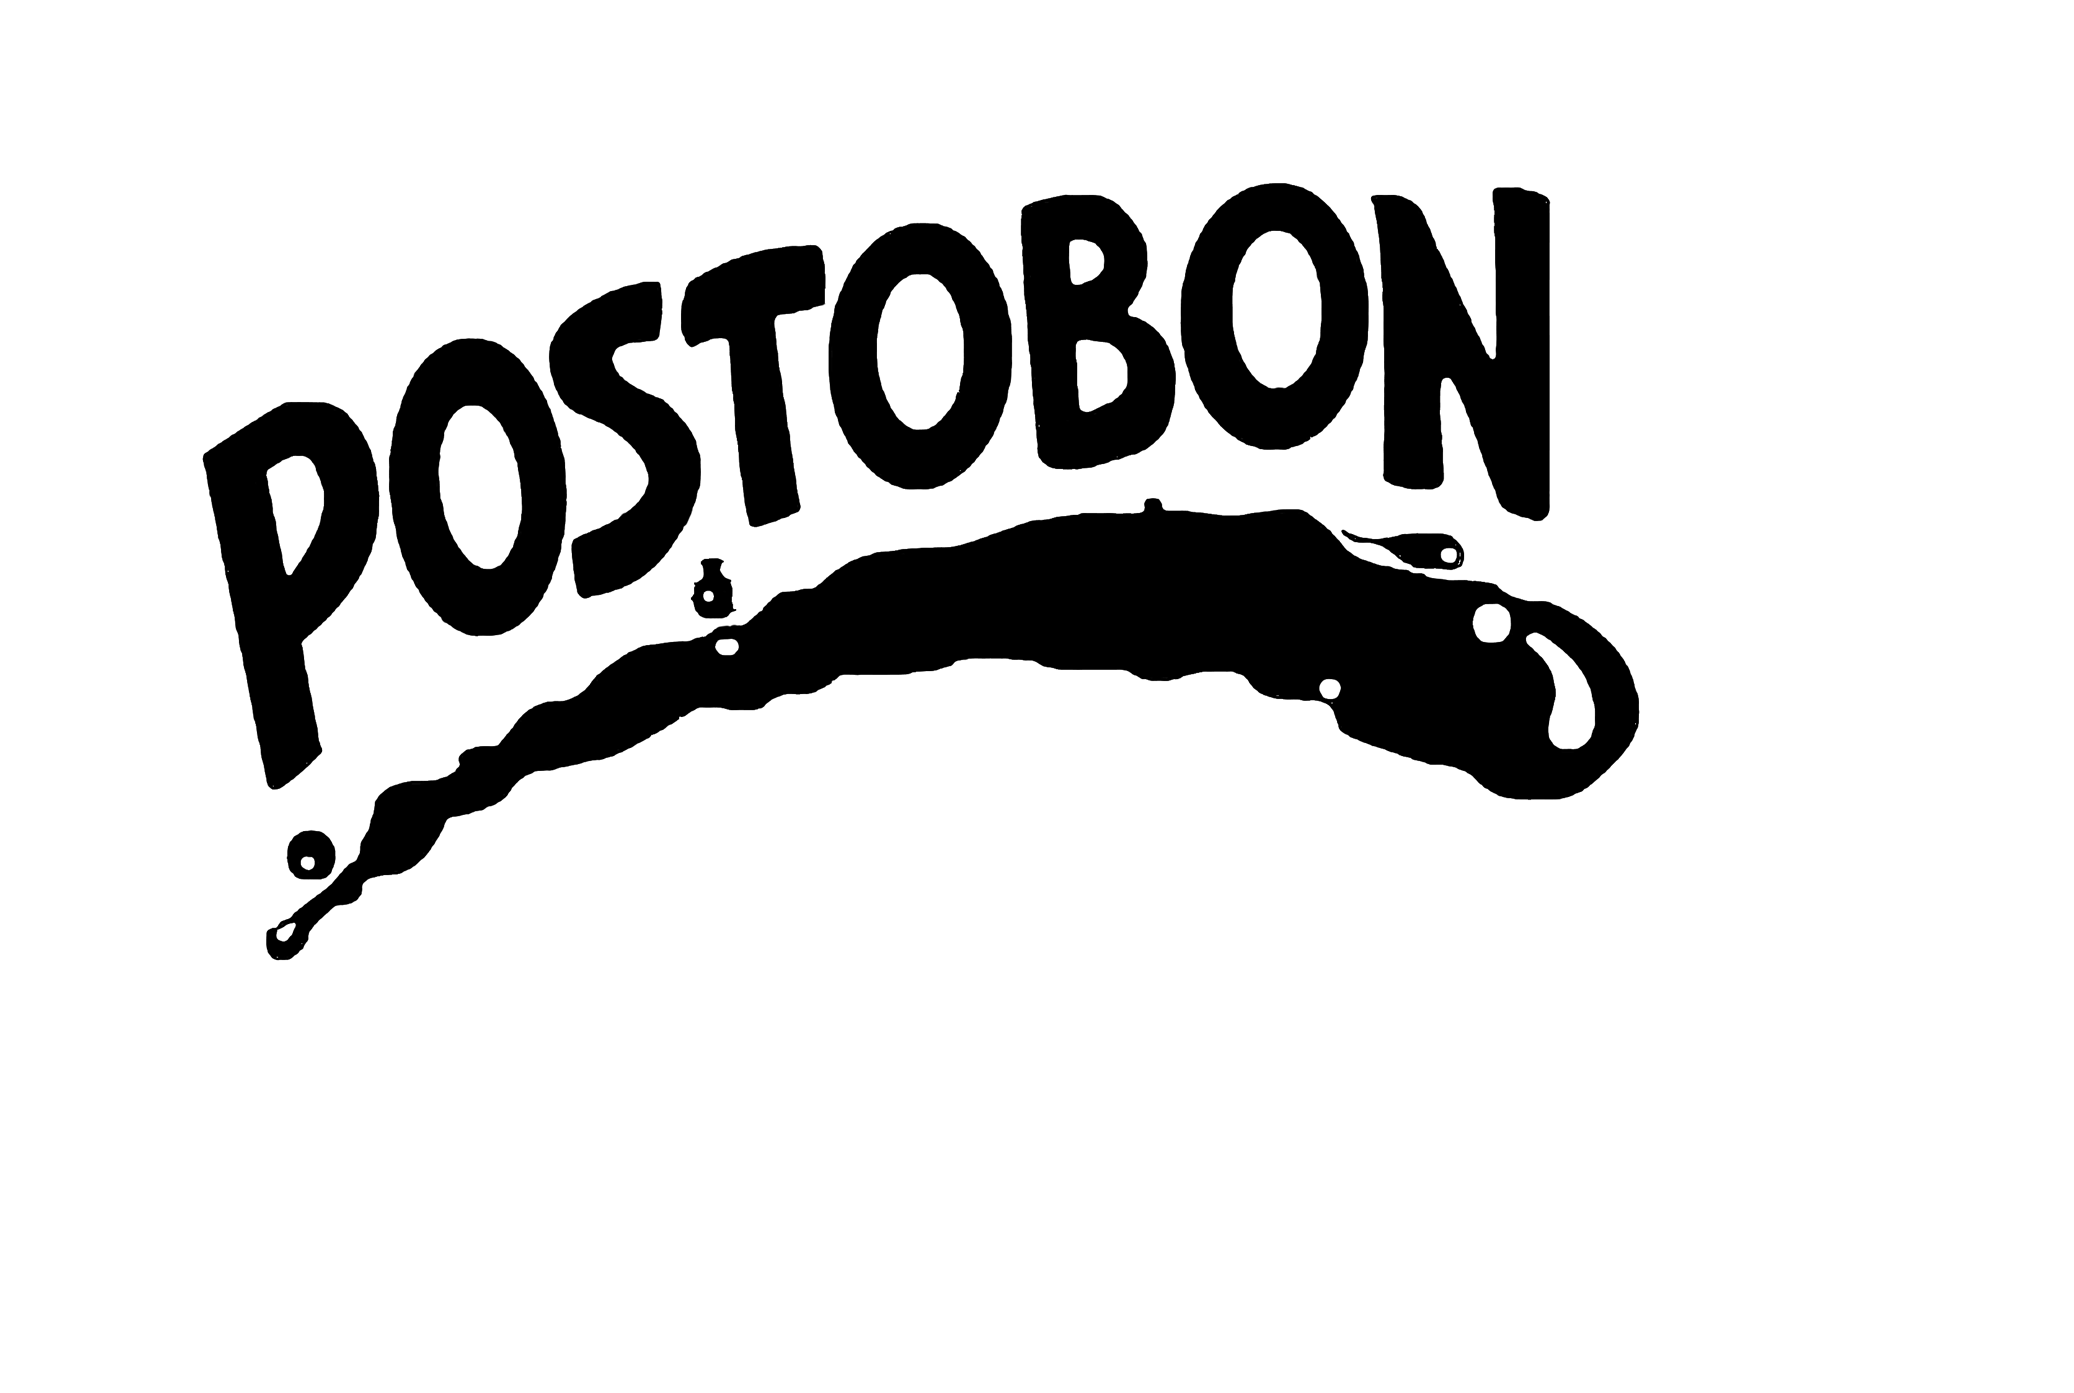 Postobon Logo - Postobon logo